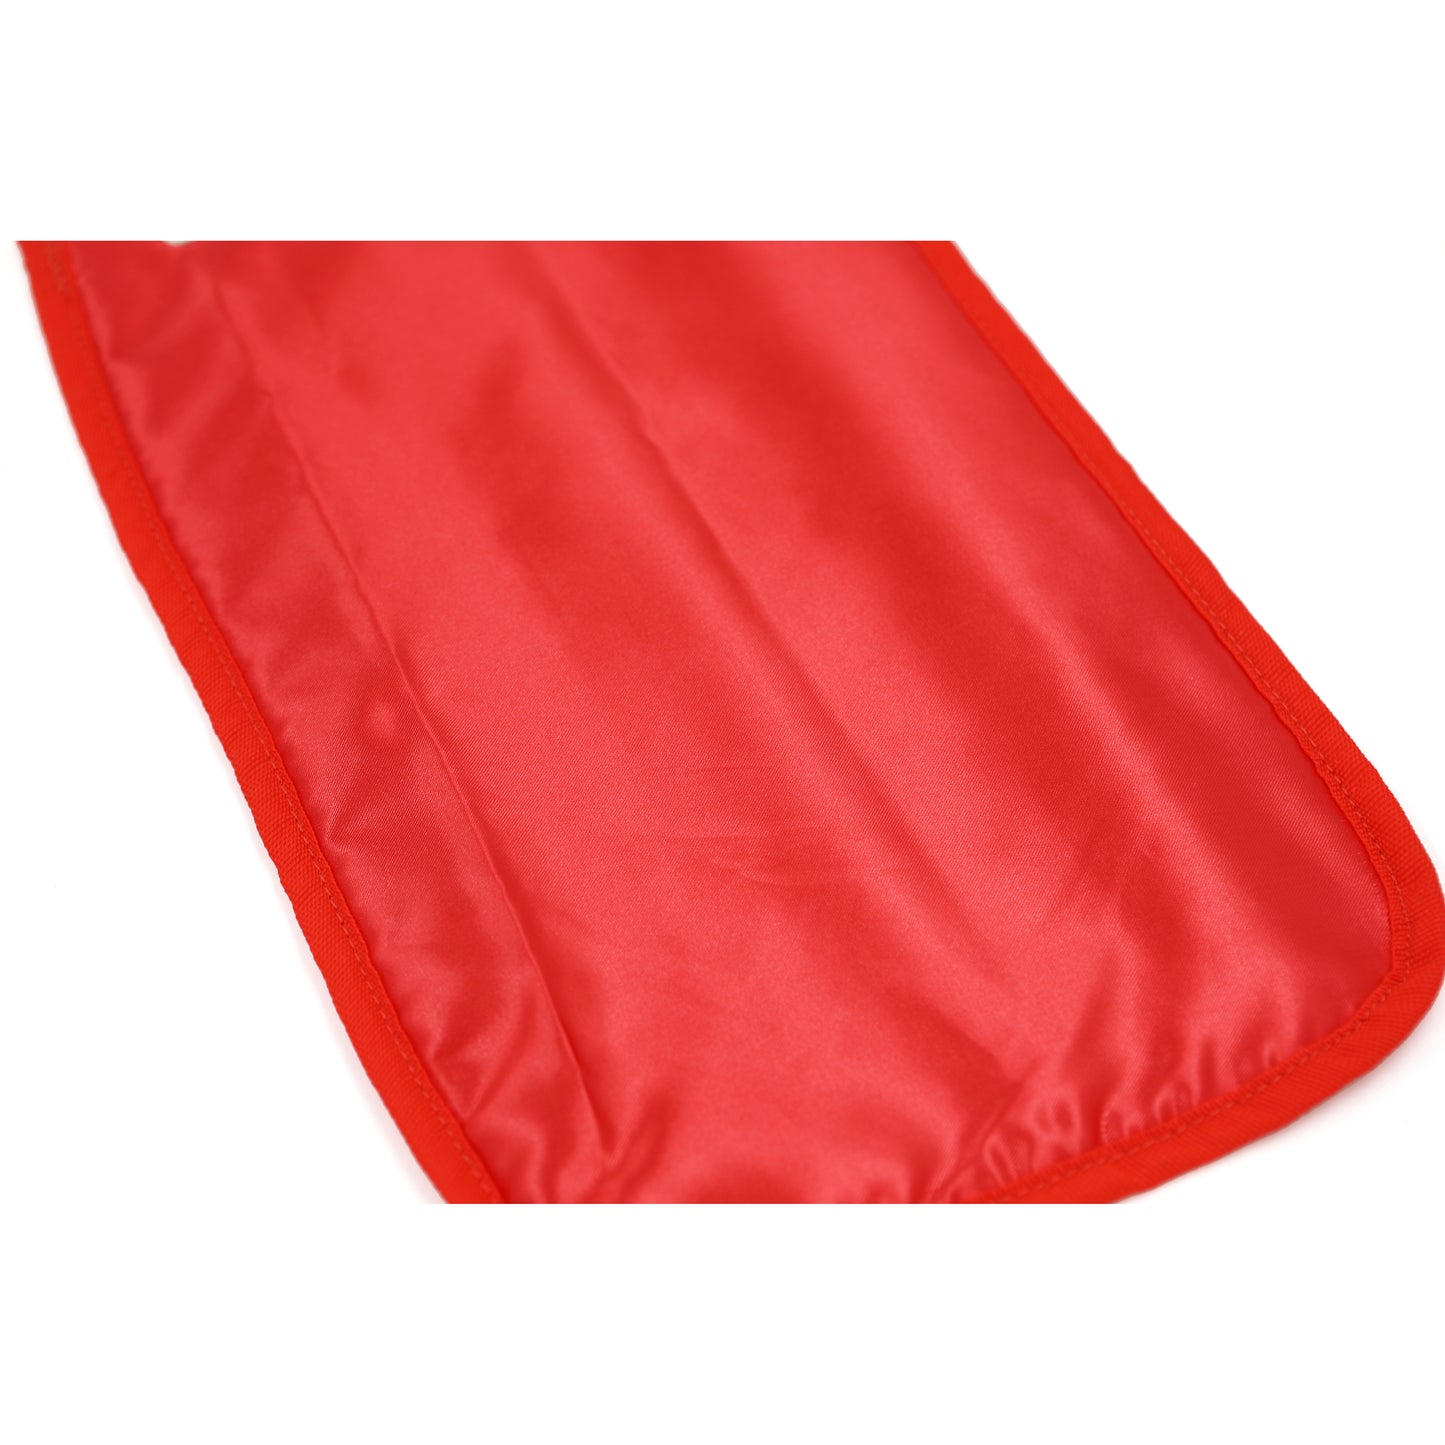 Flamin red ita bag insert flat lay photograph